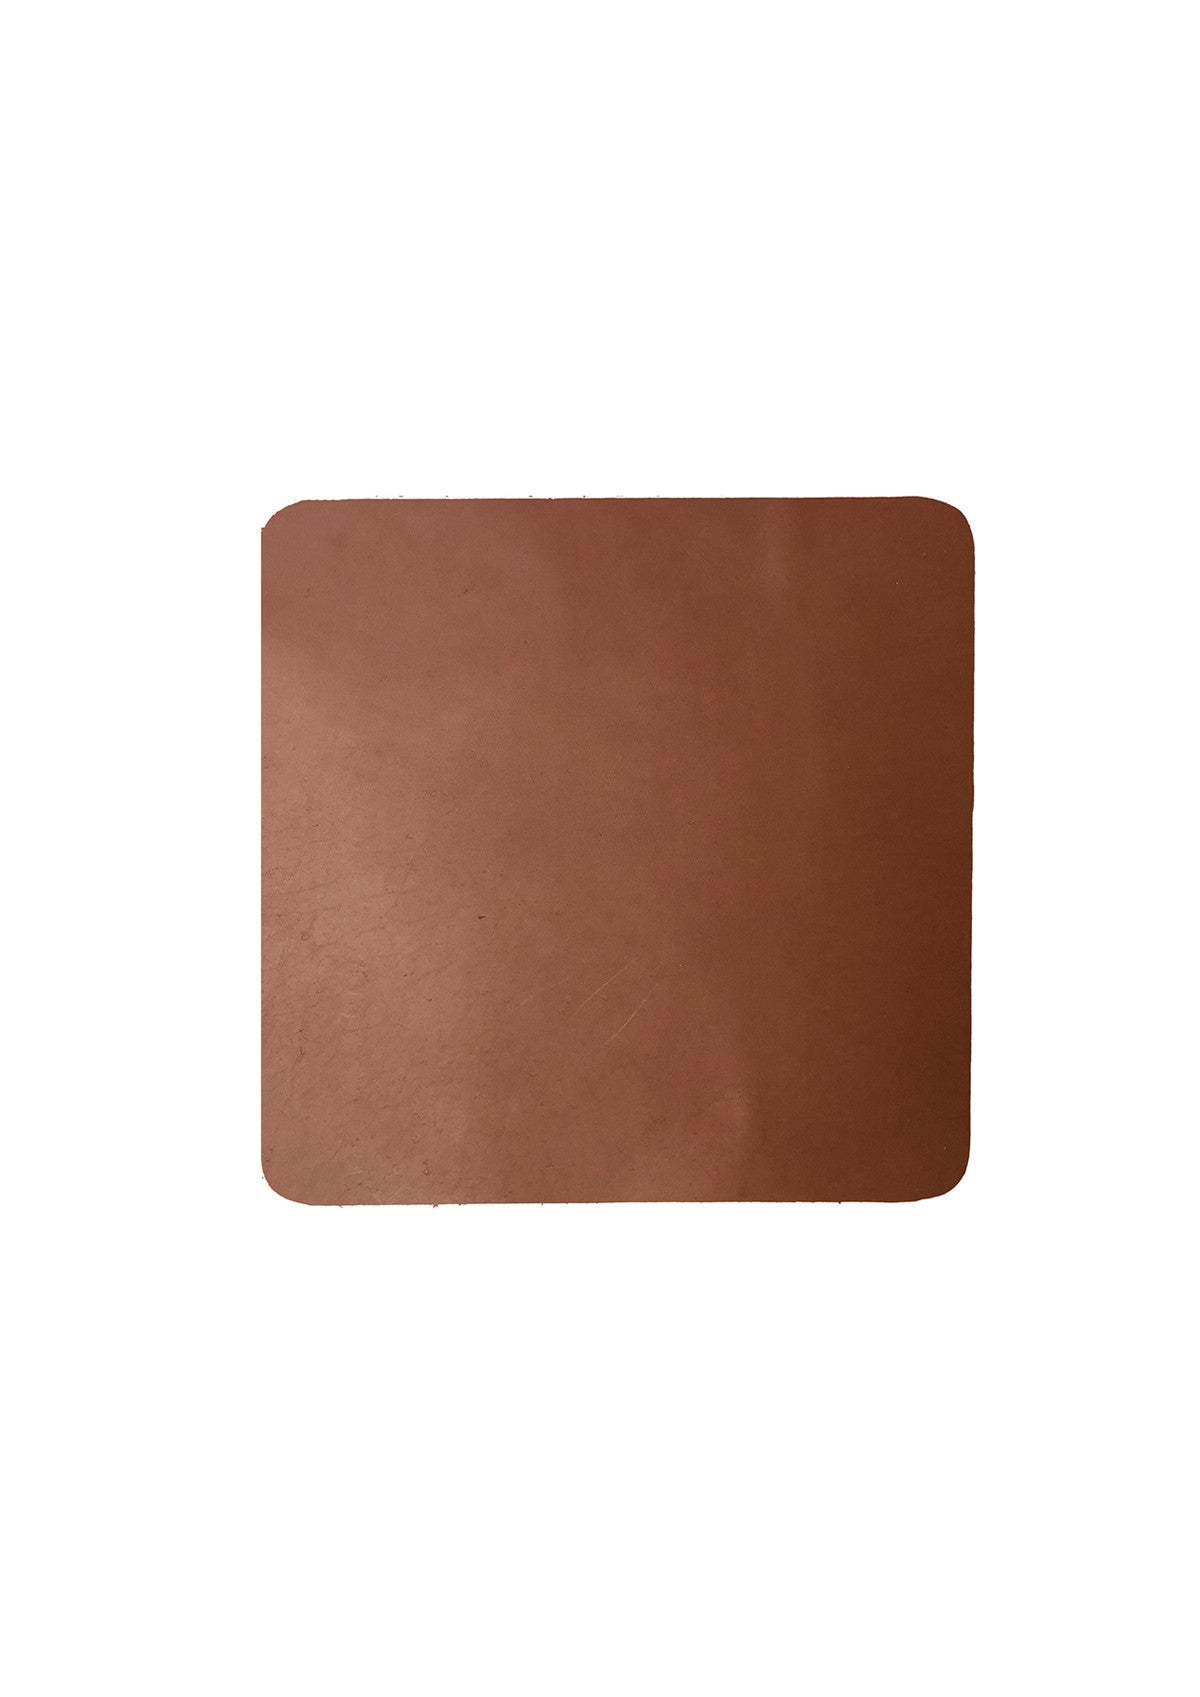 COASTERS SET 4pcs, leather brown